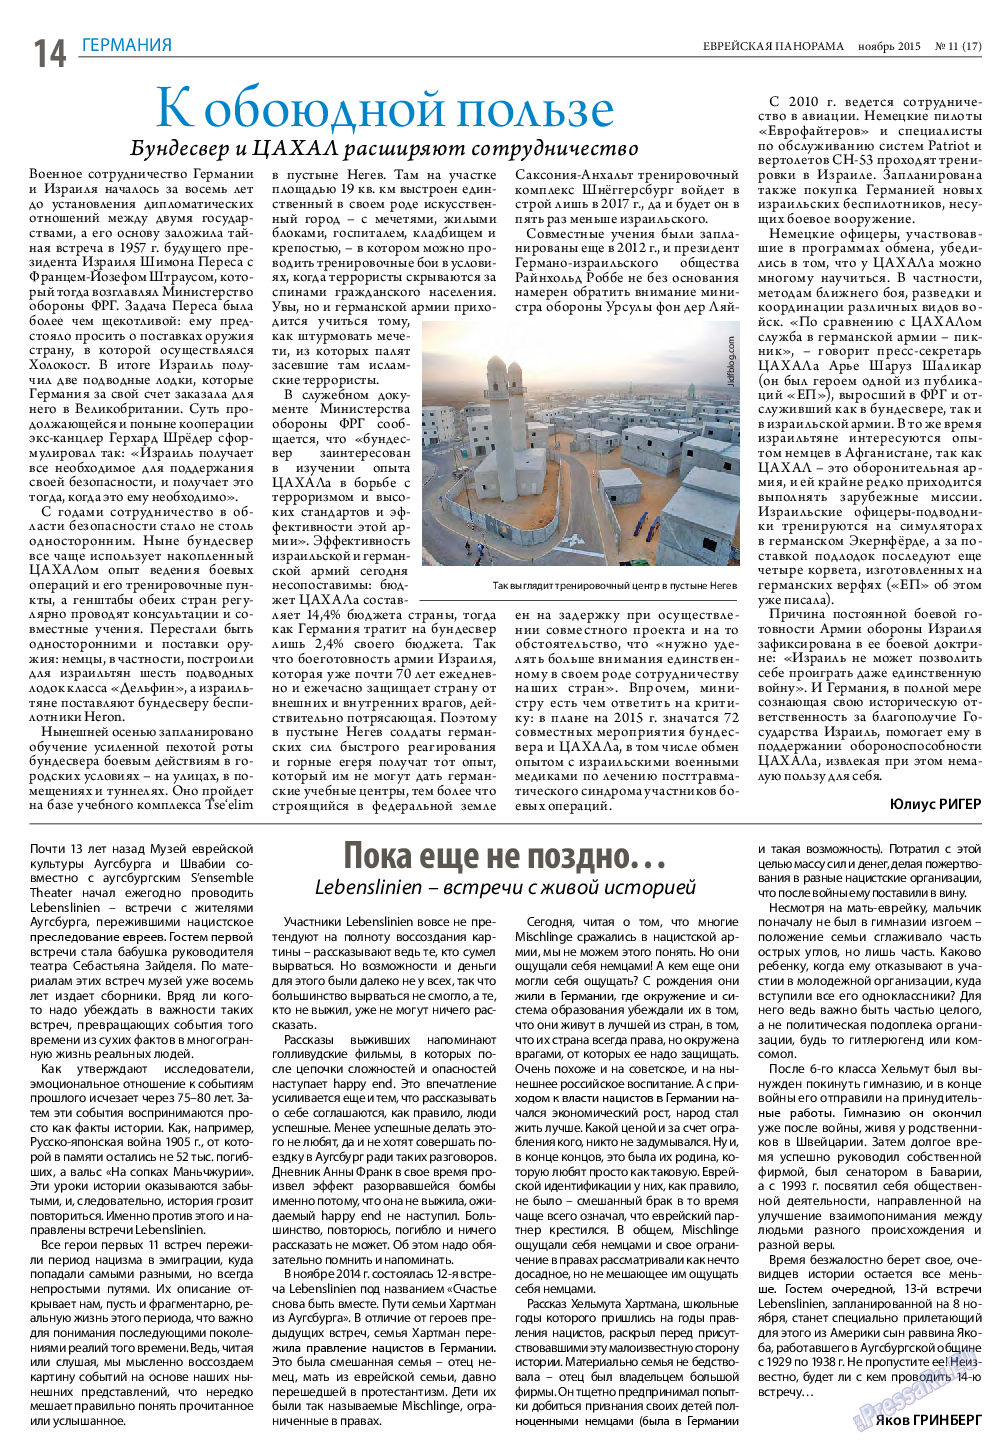 Еврейская панорама, газета. 2015 №11 стр.14